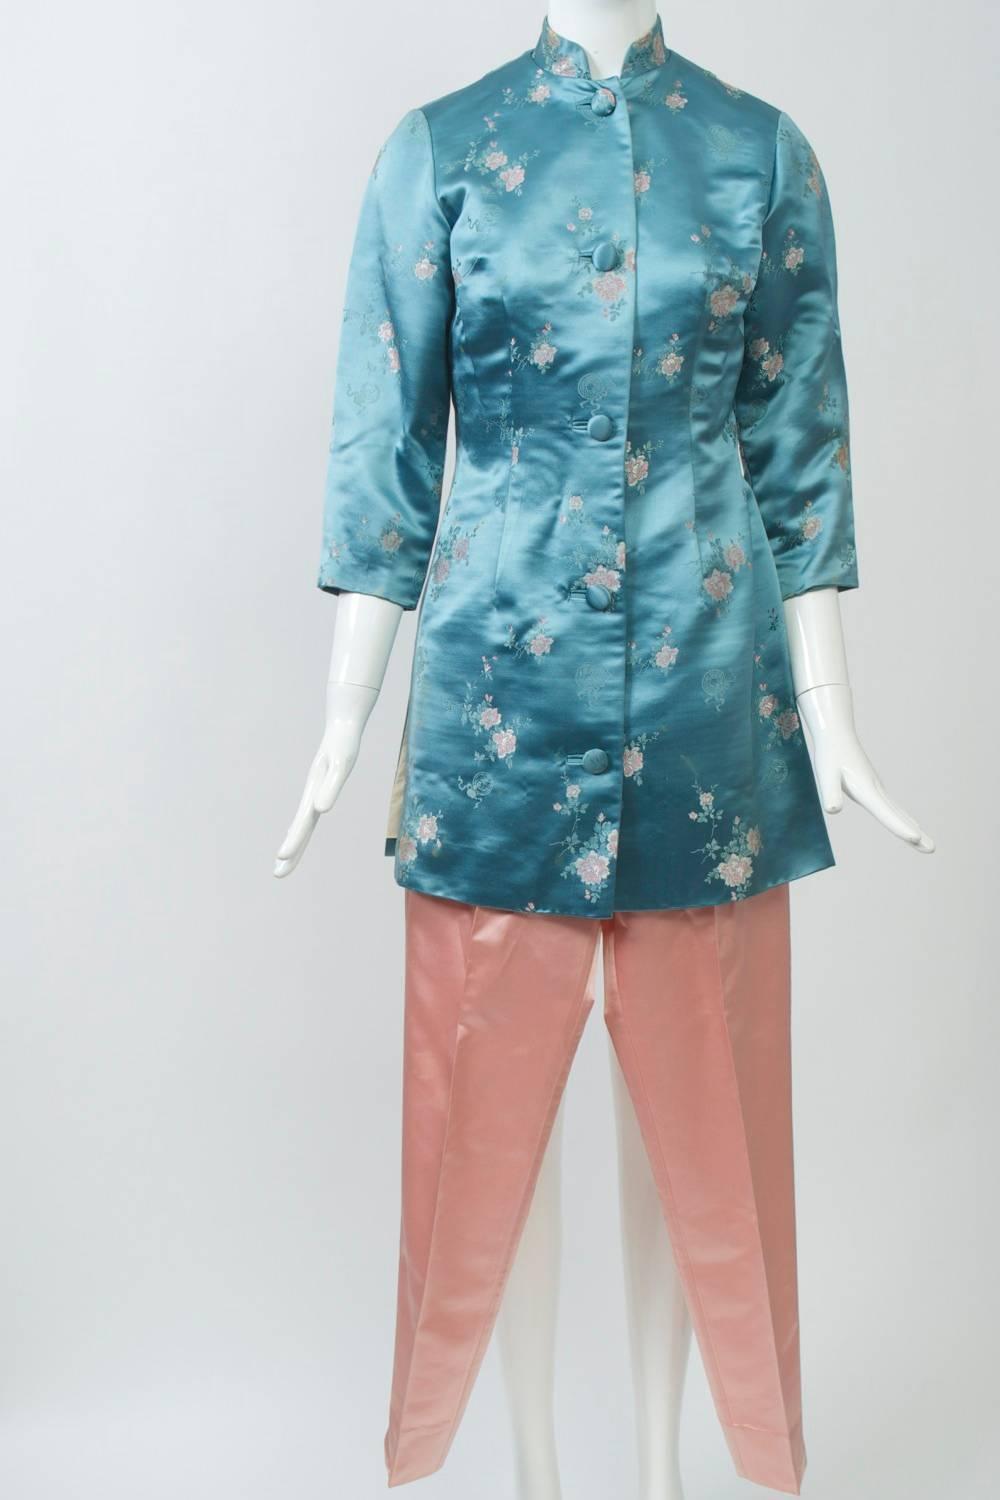 Women's Brocade Hong Kong Jacket and Pants For Sale